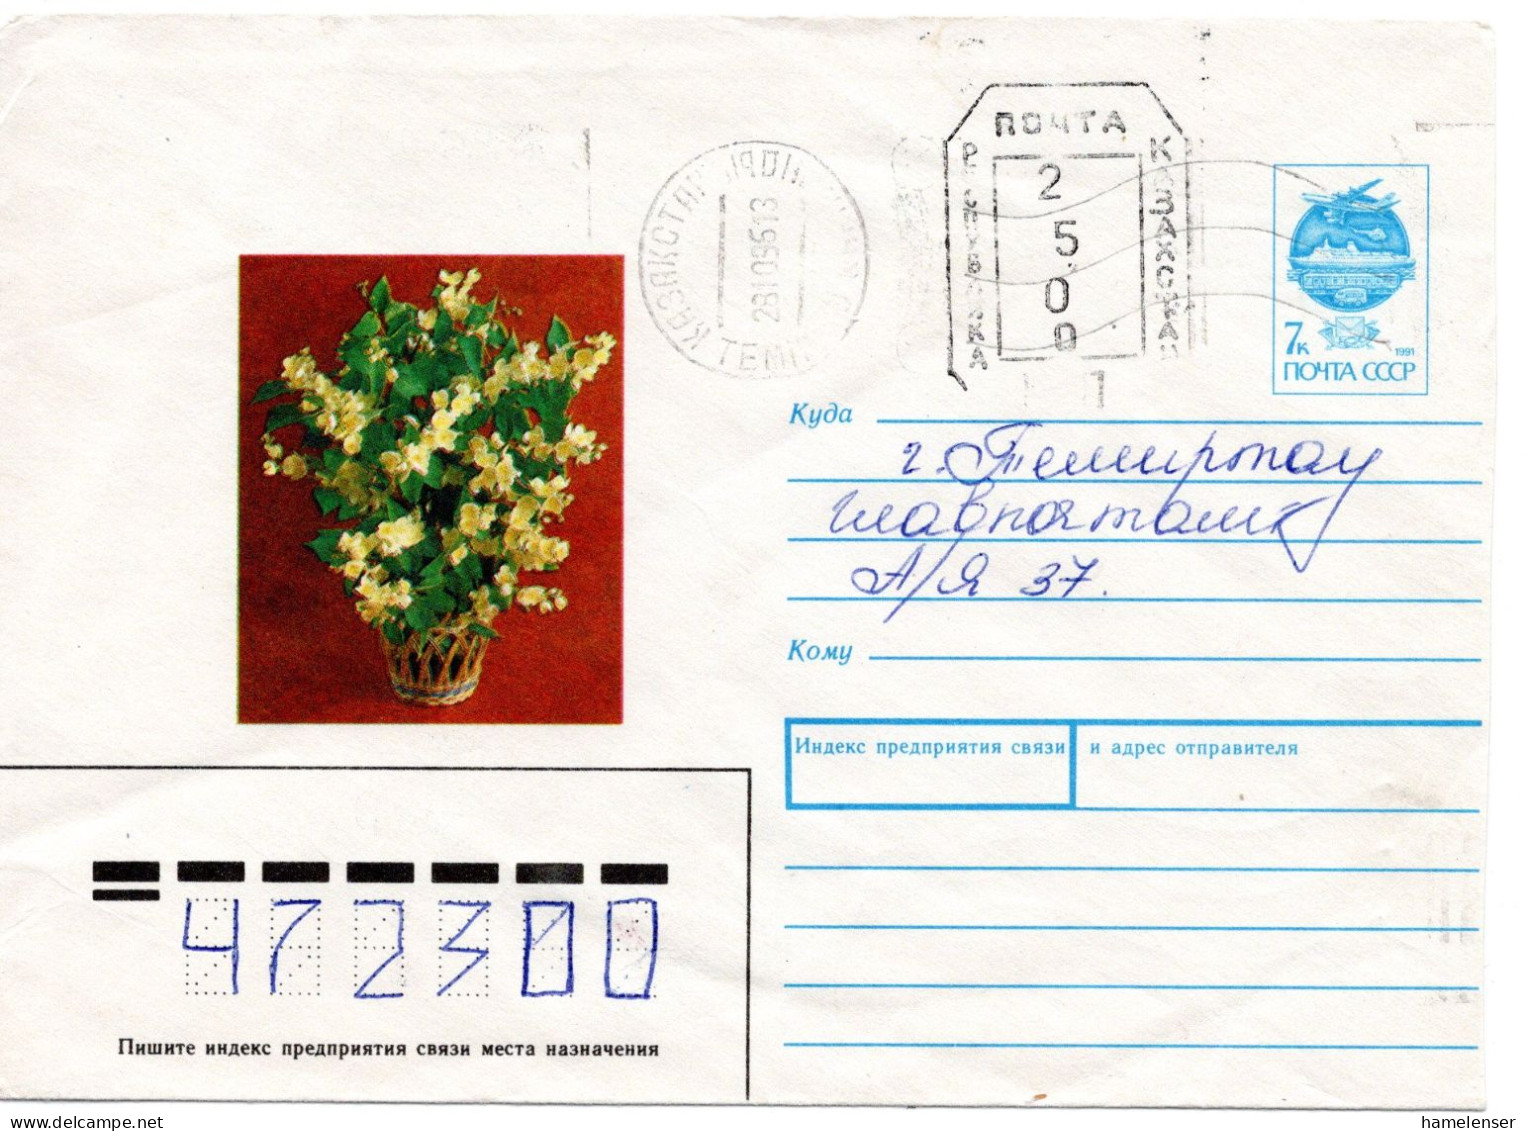 64356 - Kasachstan - 1993 - Sowj 7K GAU "Blumen" M Aufdruck "2500" Als OrtsBf TEMIRTAU - Kasachstan